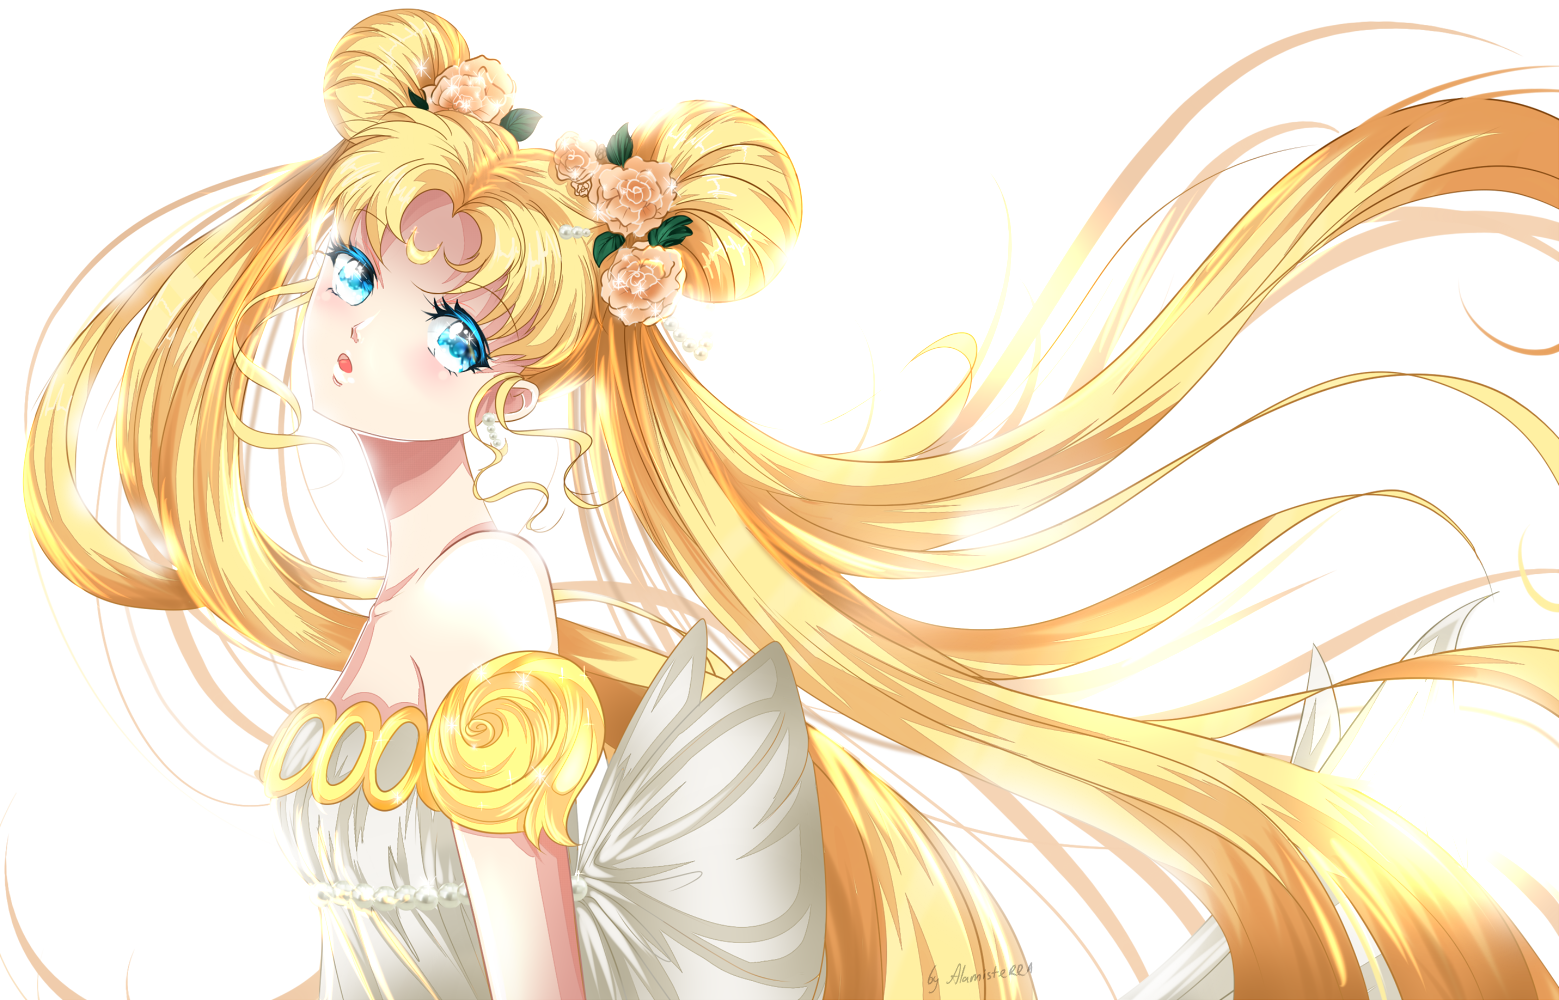 Tsukino Usagi Long Hair Blonde Aqua Eyes Twintails Dress Flowers Bow Anime 1559x1000